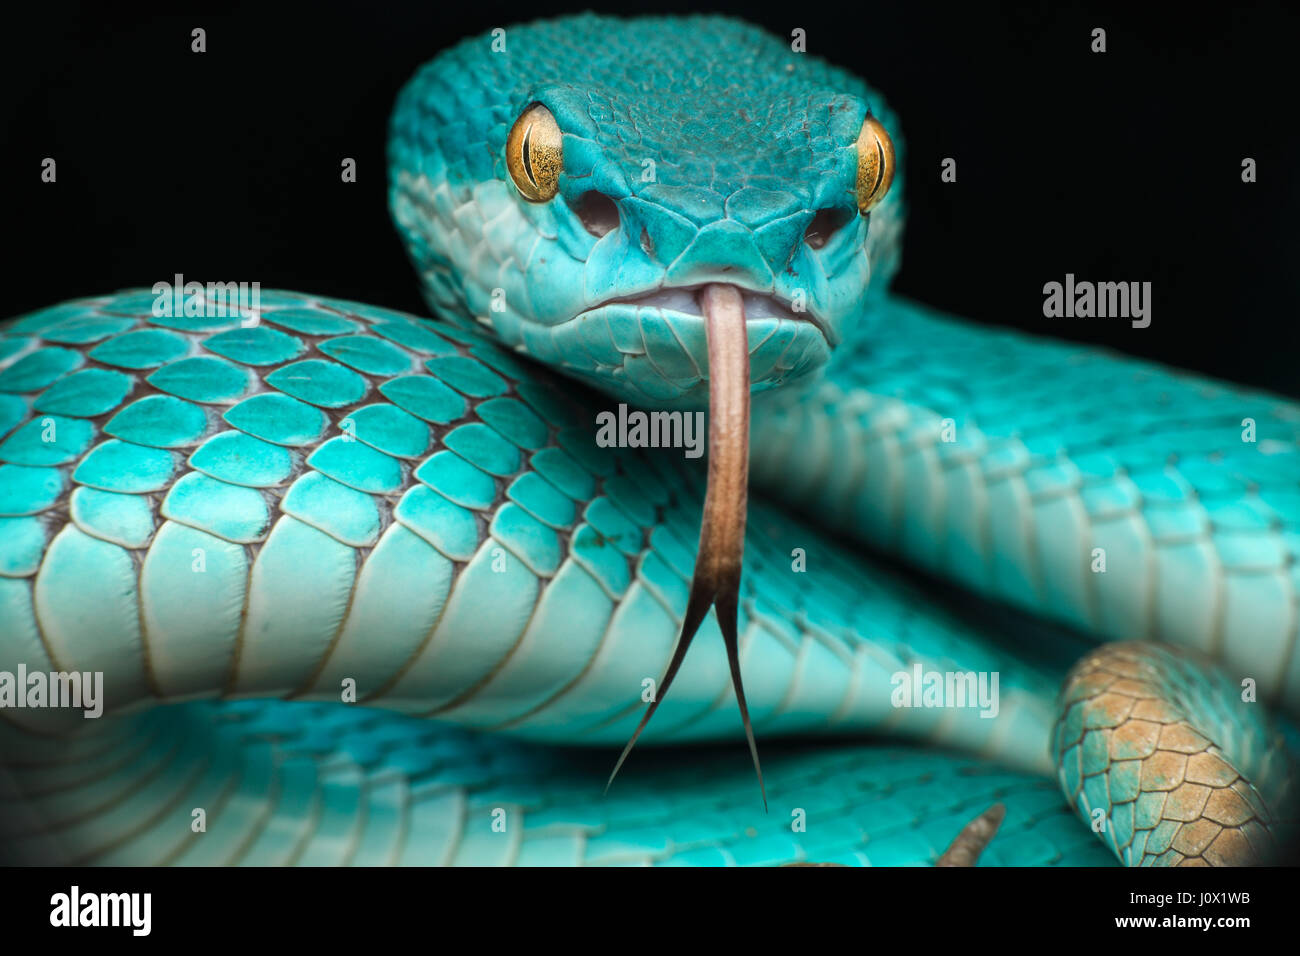 Close-up of a coiled Pit viper snake (Trimeresurus albolabris insularis), Indonesia Stock Photo